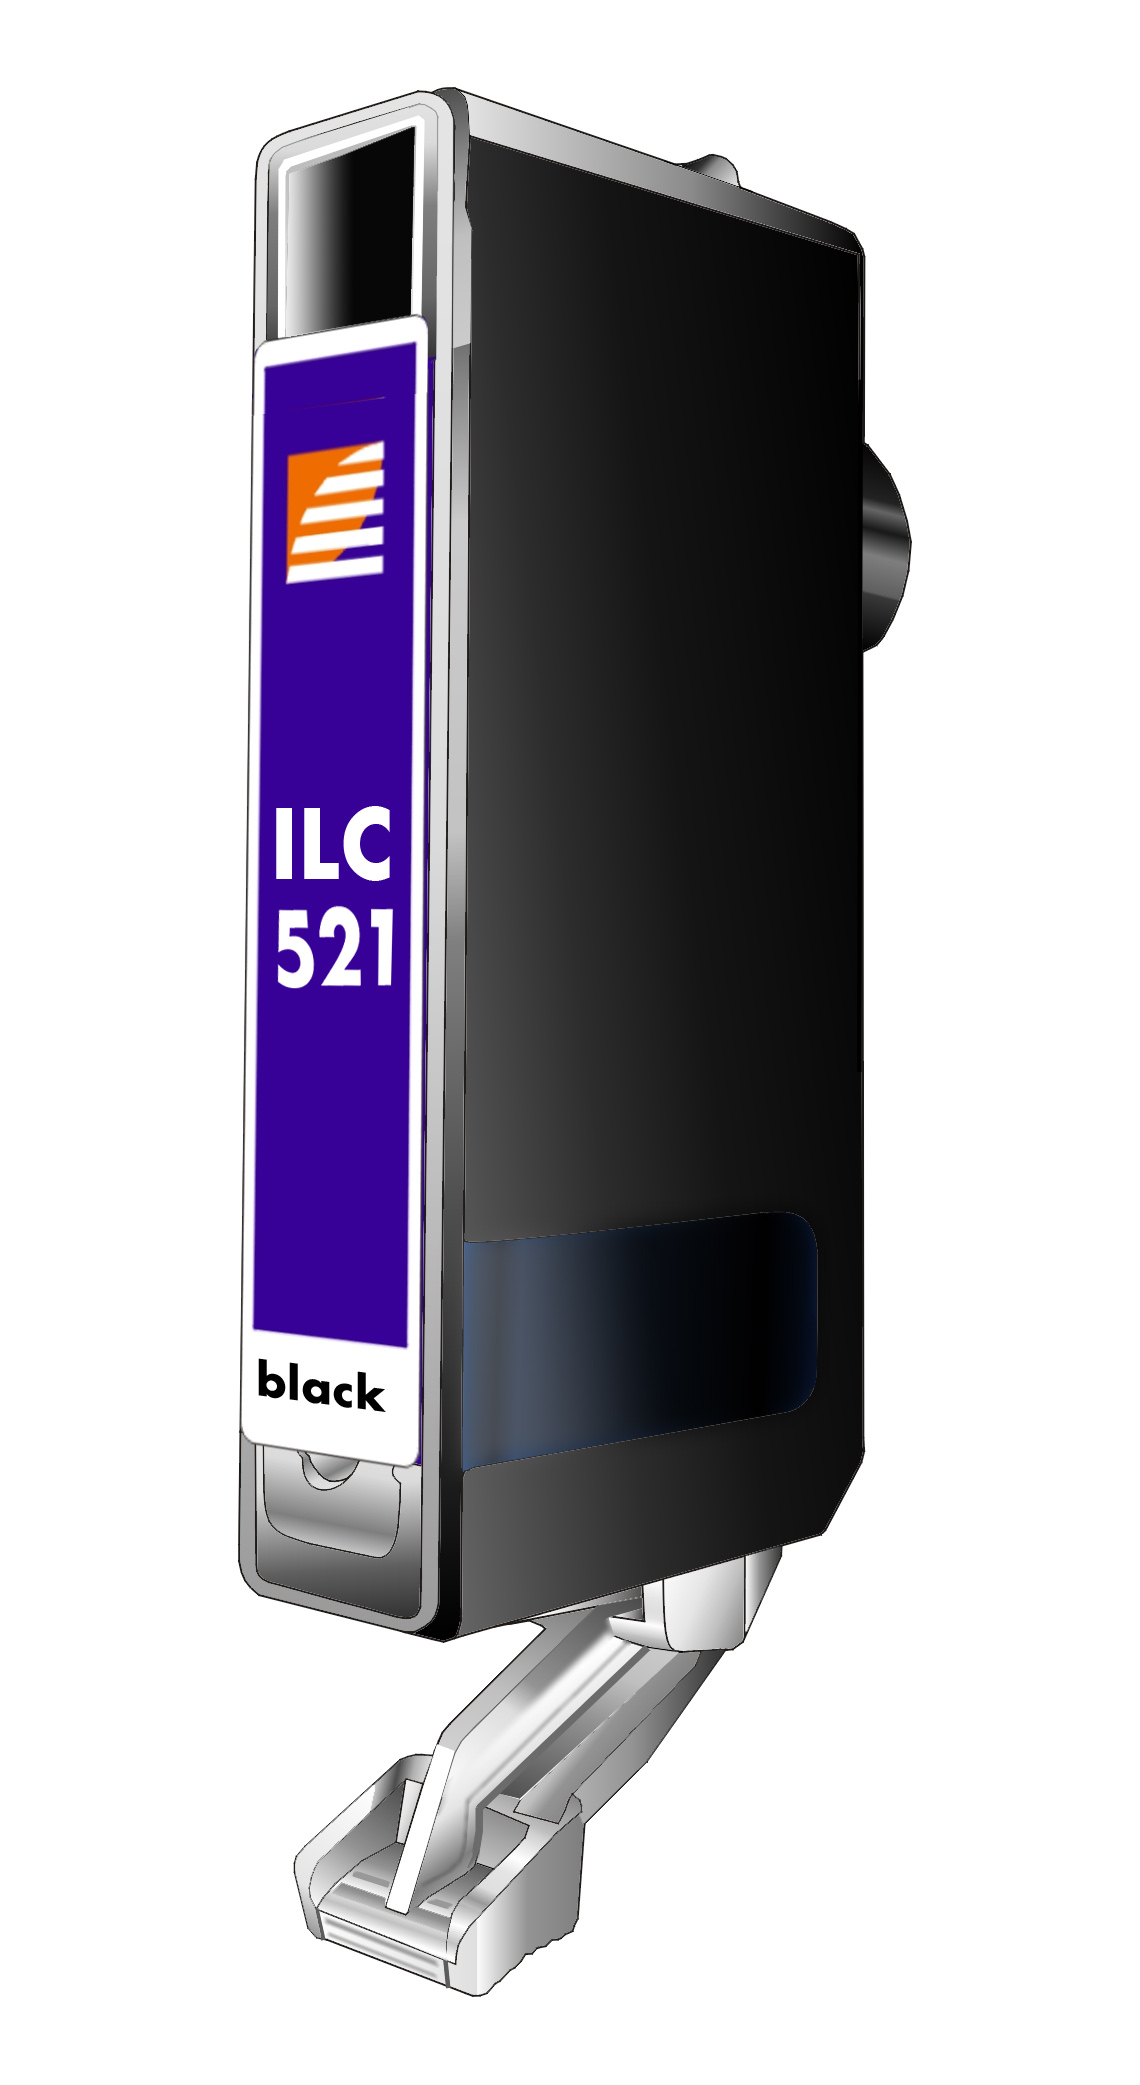 LIC 521 black